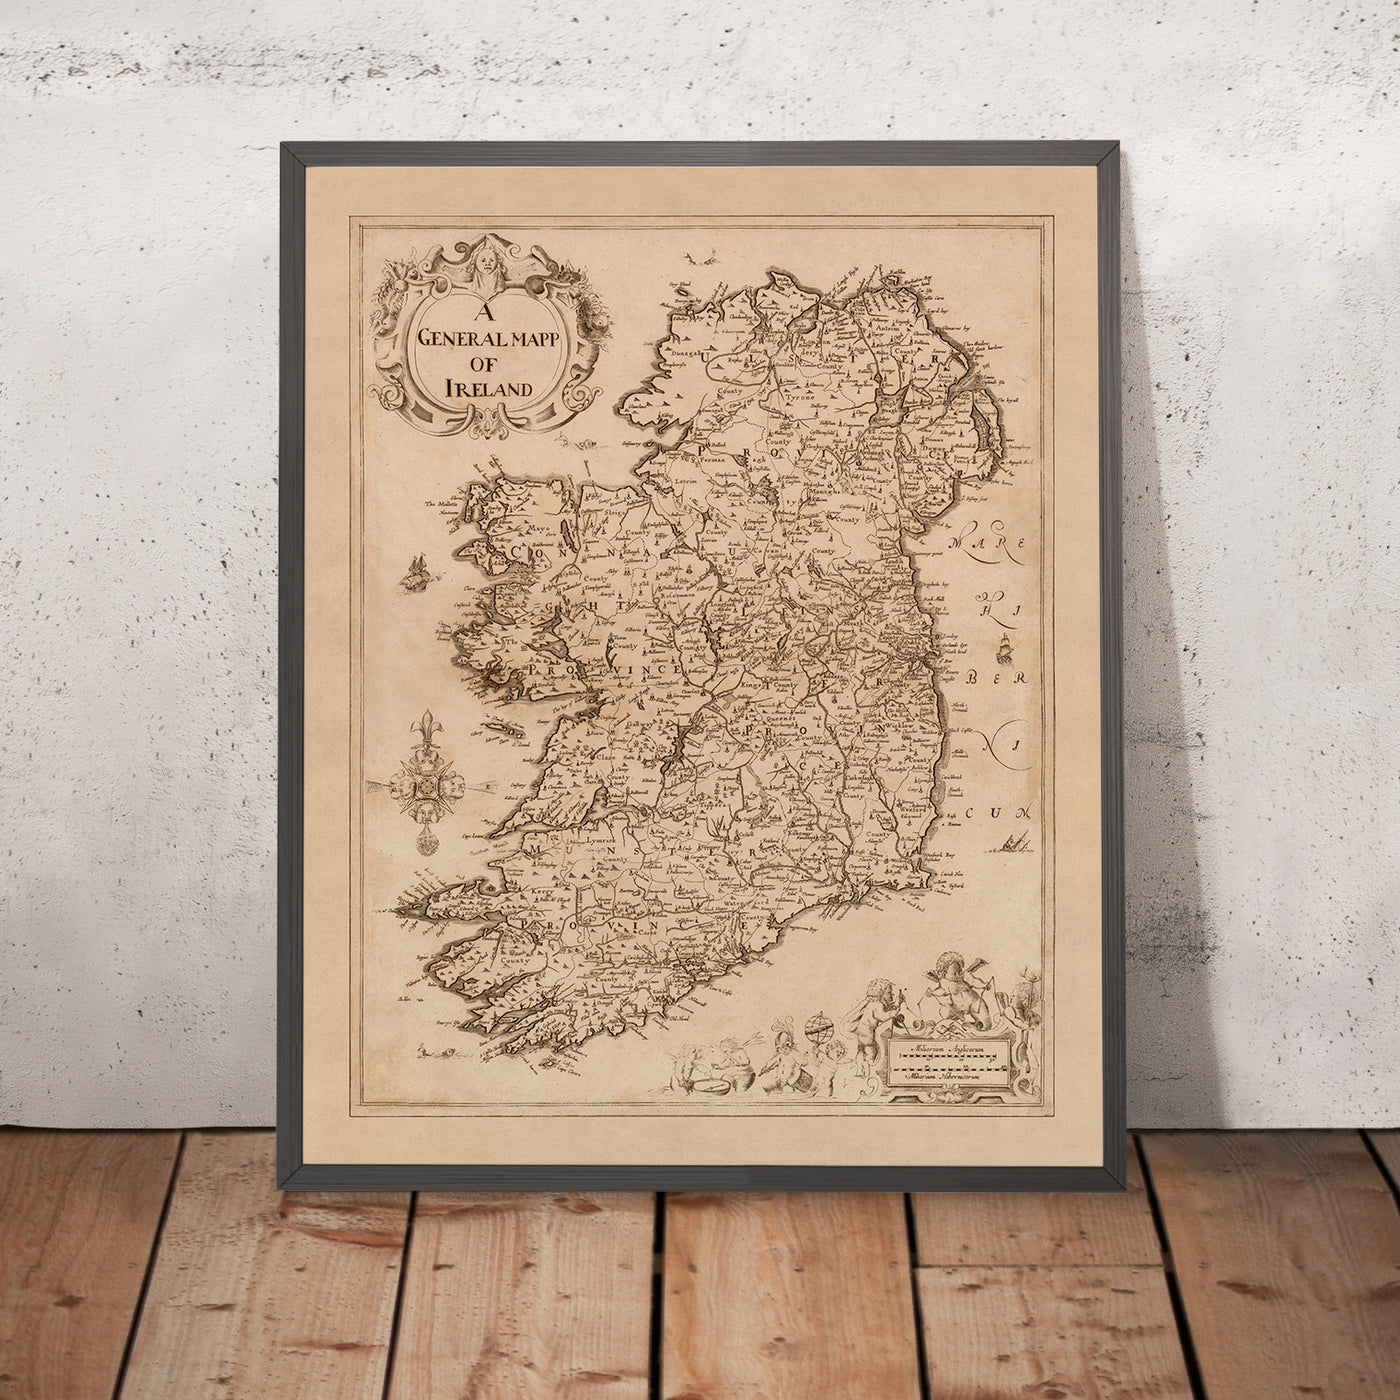 Antiguo mapa de Irlanda de Petty, 1685: Dublín, Cork, Limerick, Galway, Waterford